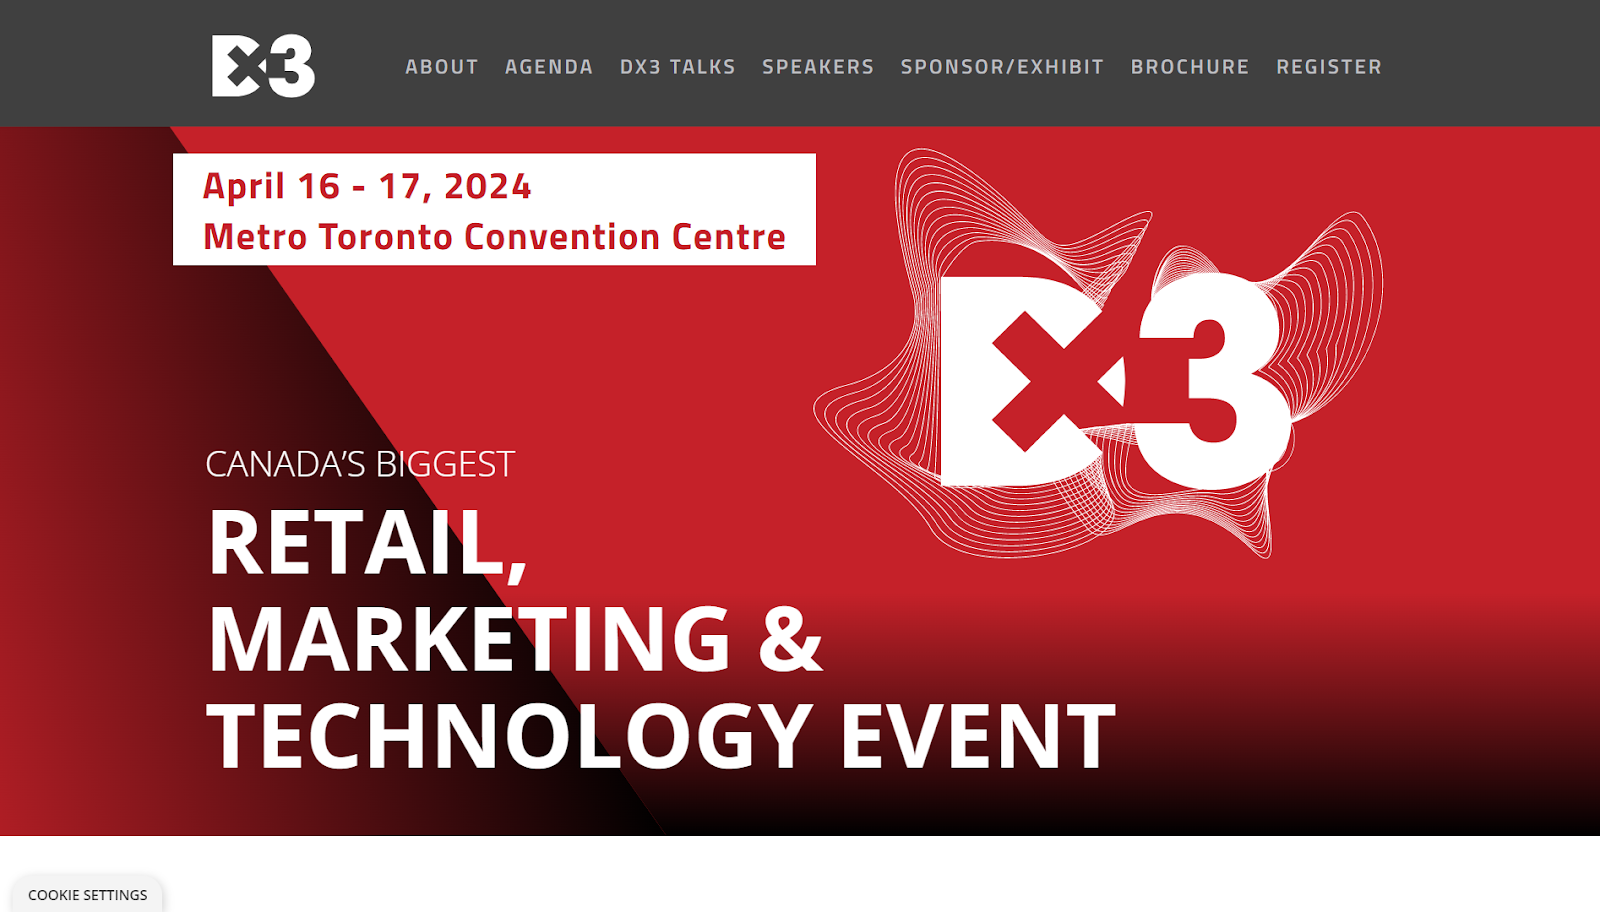 DX3 Canada event promotional website banner